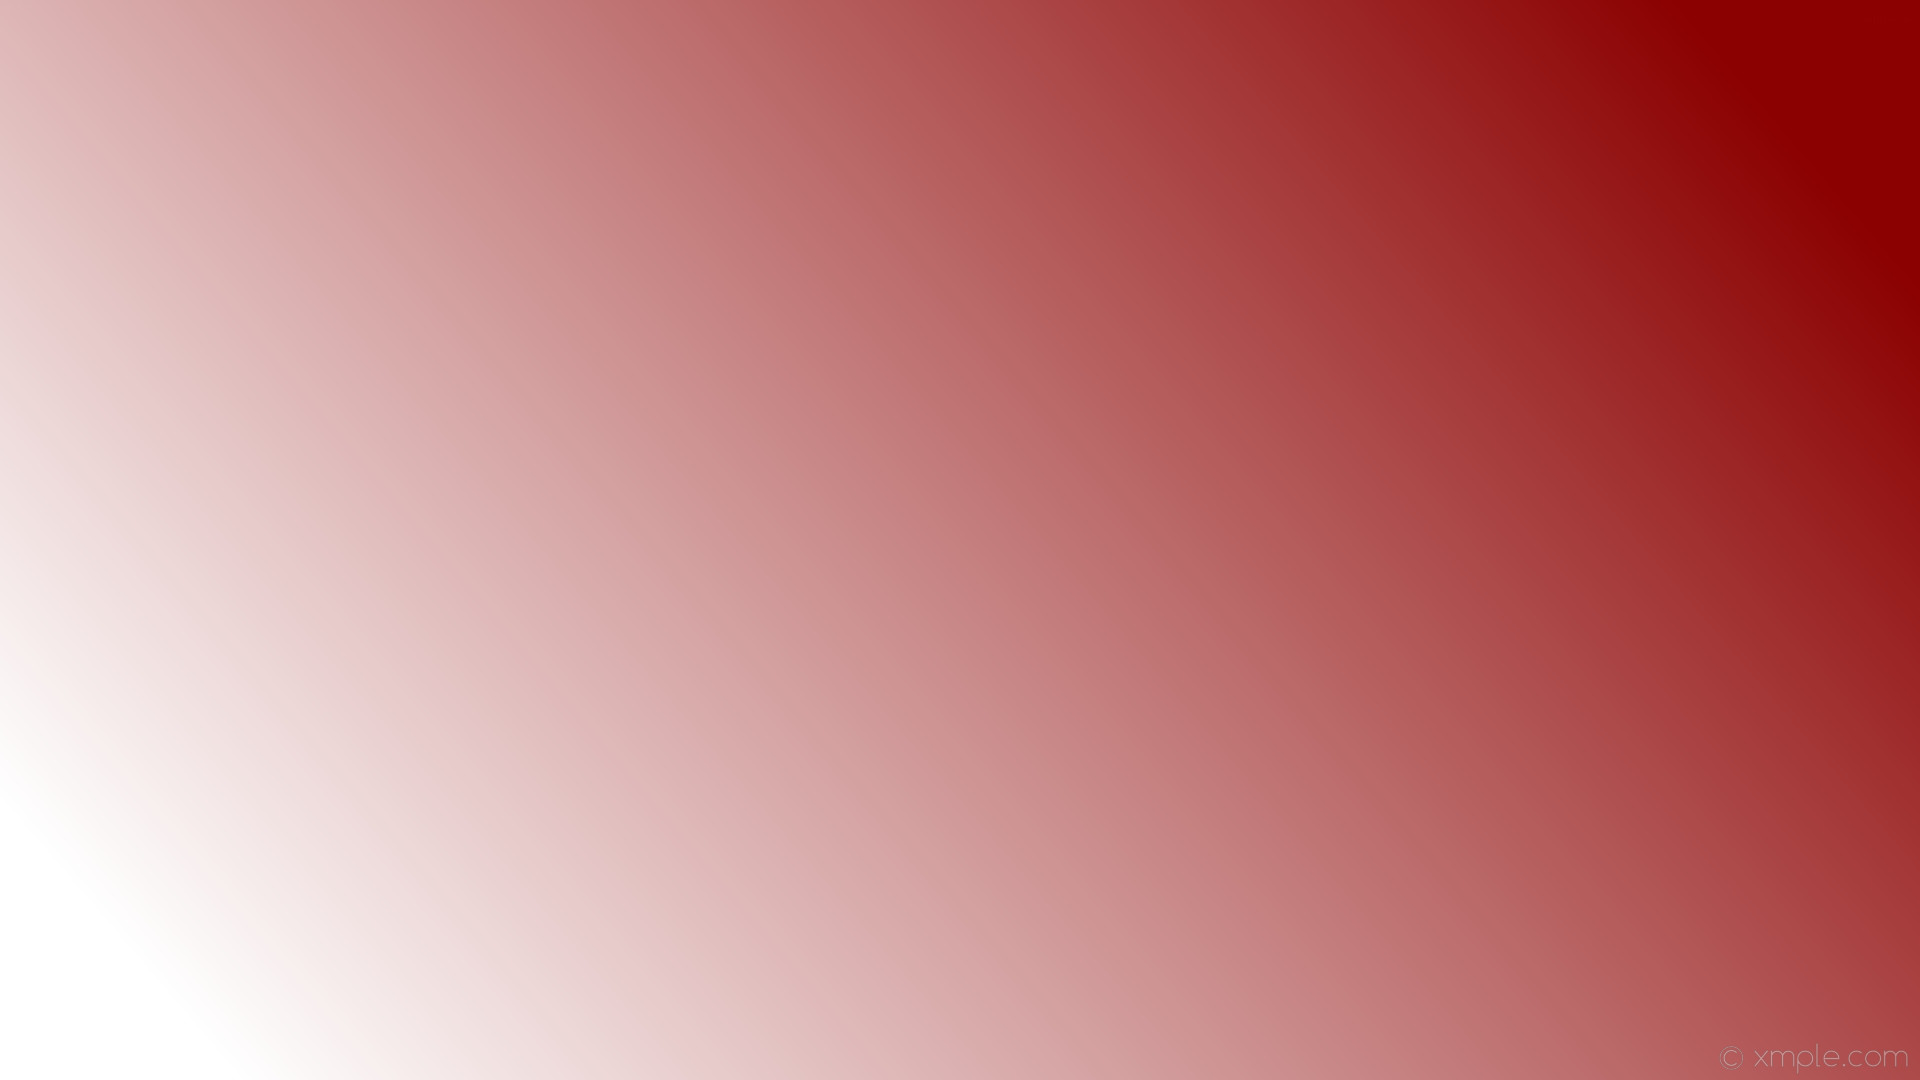 1920x1080 wallpaper white red gradient linear dark red #ffffff #8b0000 195Â°